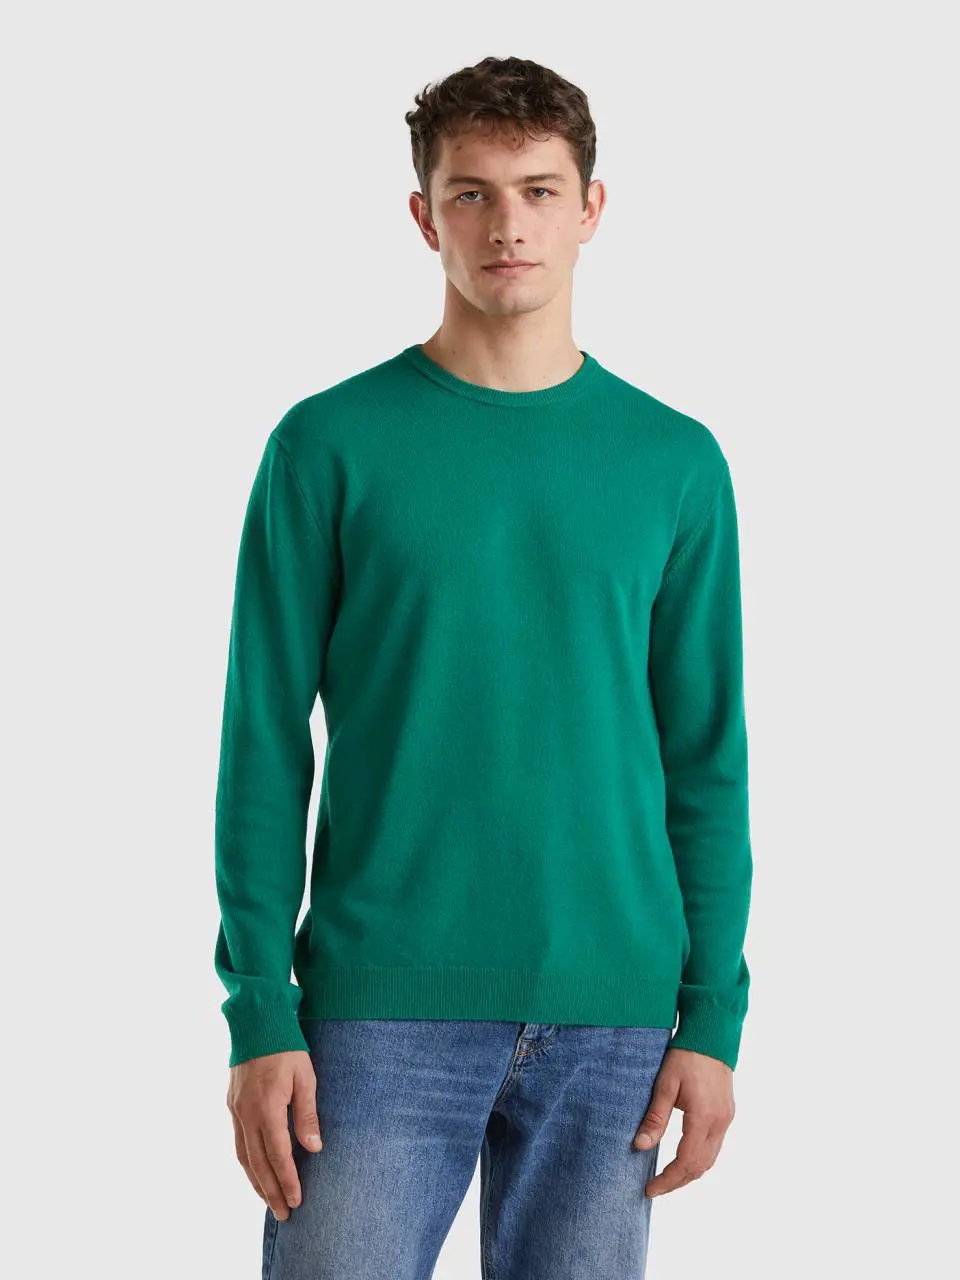 Benetton green crew neck sweater in pure merino wool. 1